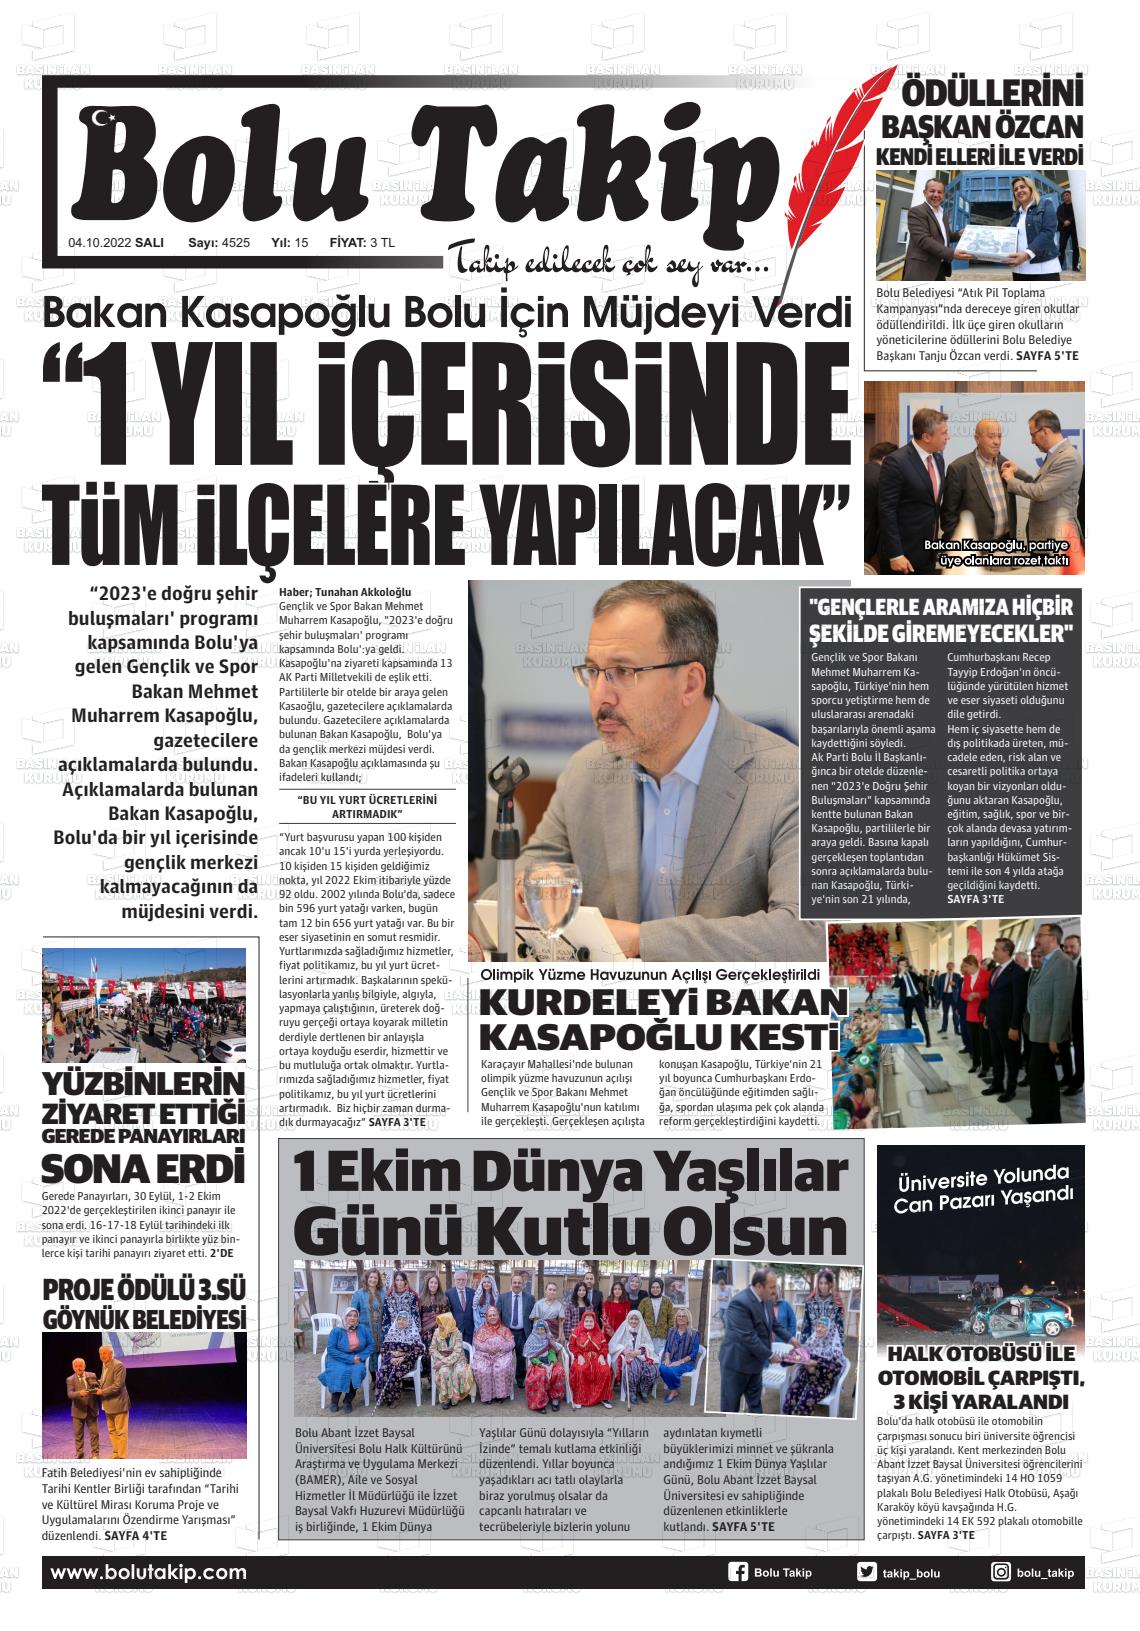 04 Ekim 2022 Bolu Takip Gazete Manşeti